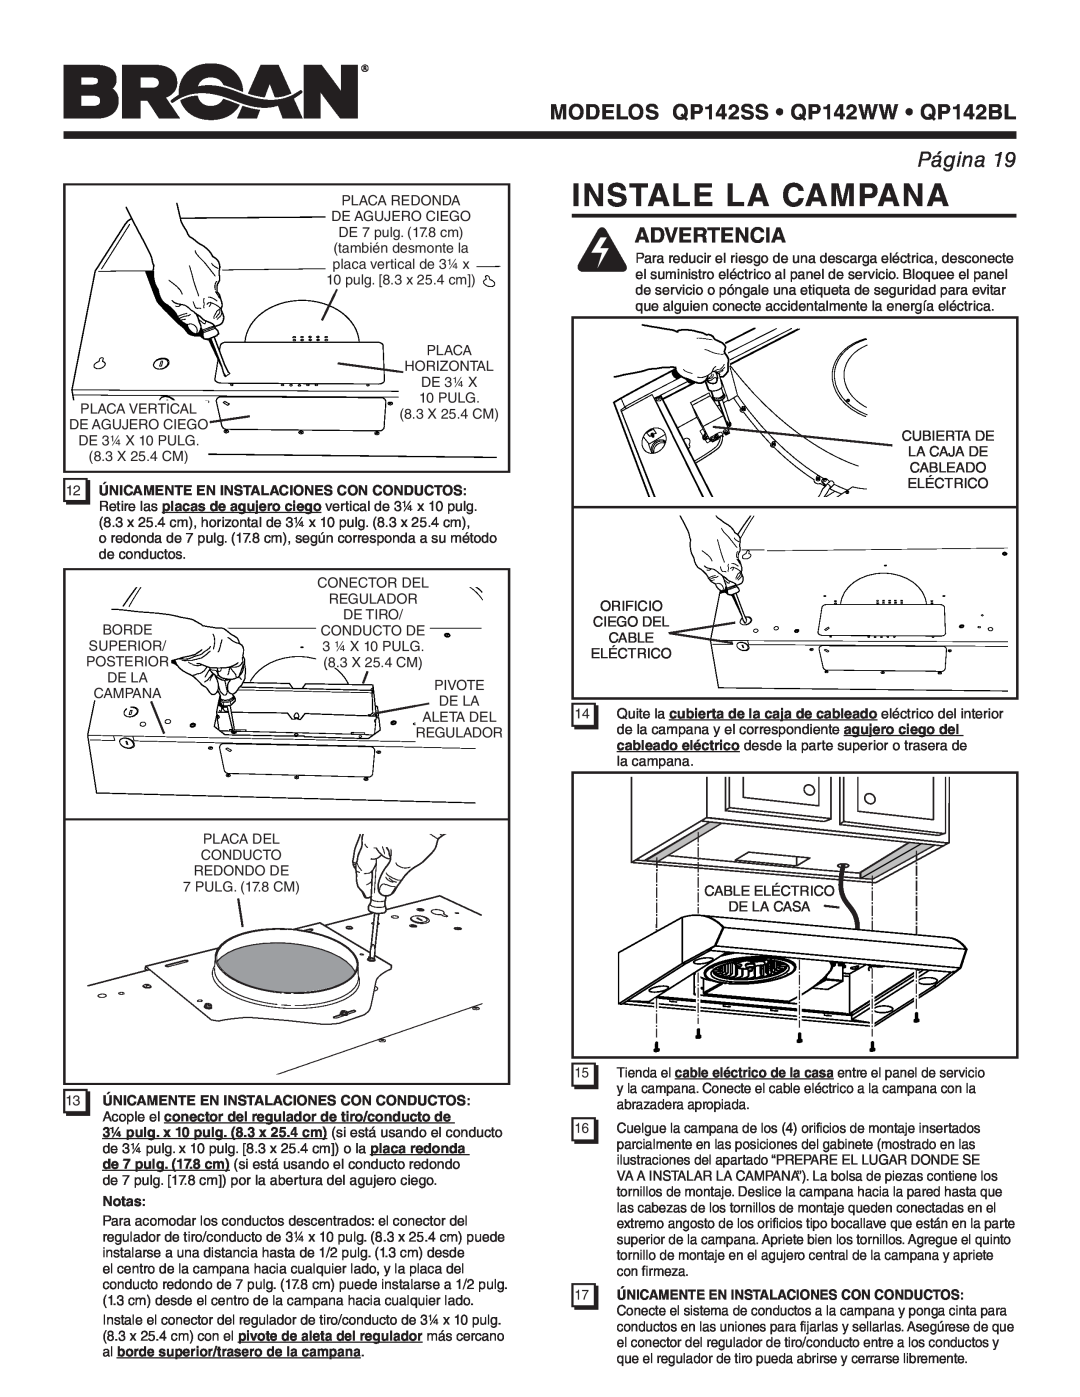 Broan manual Instale La Campana, Advertencia, MODELOS QP142SS QP142WW QP142BL, Página, Notas 